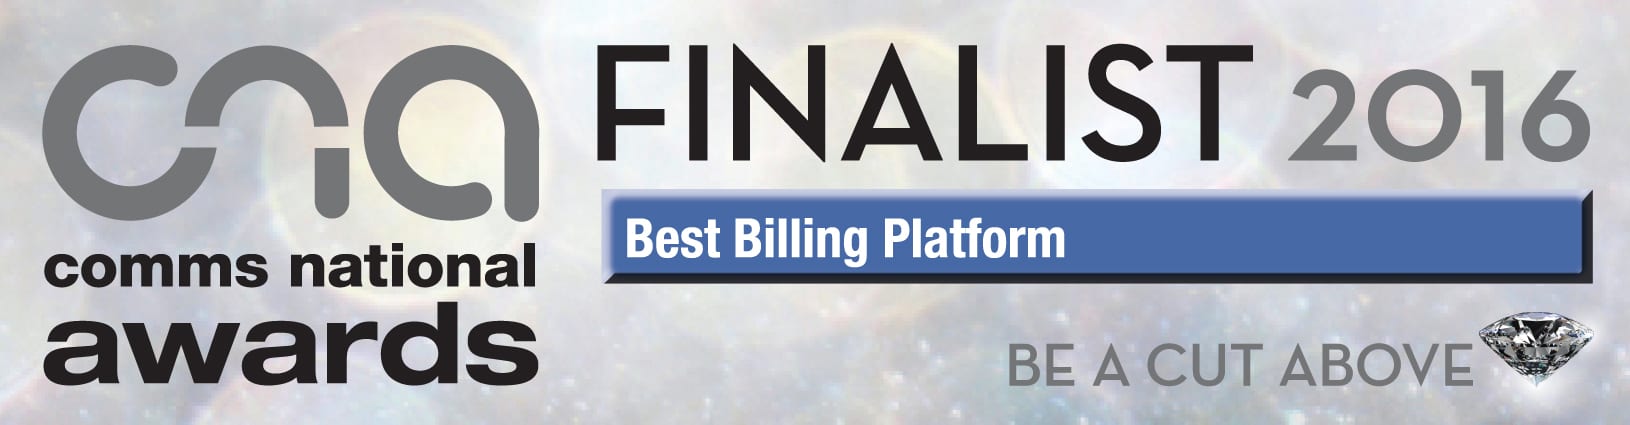 Best Billing Platform finalist logo